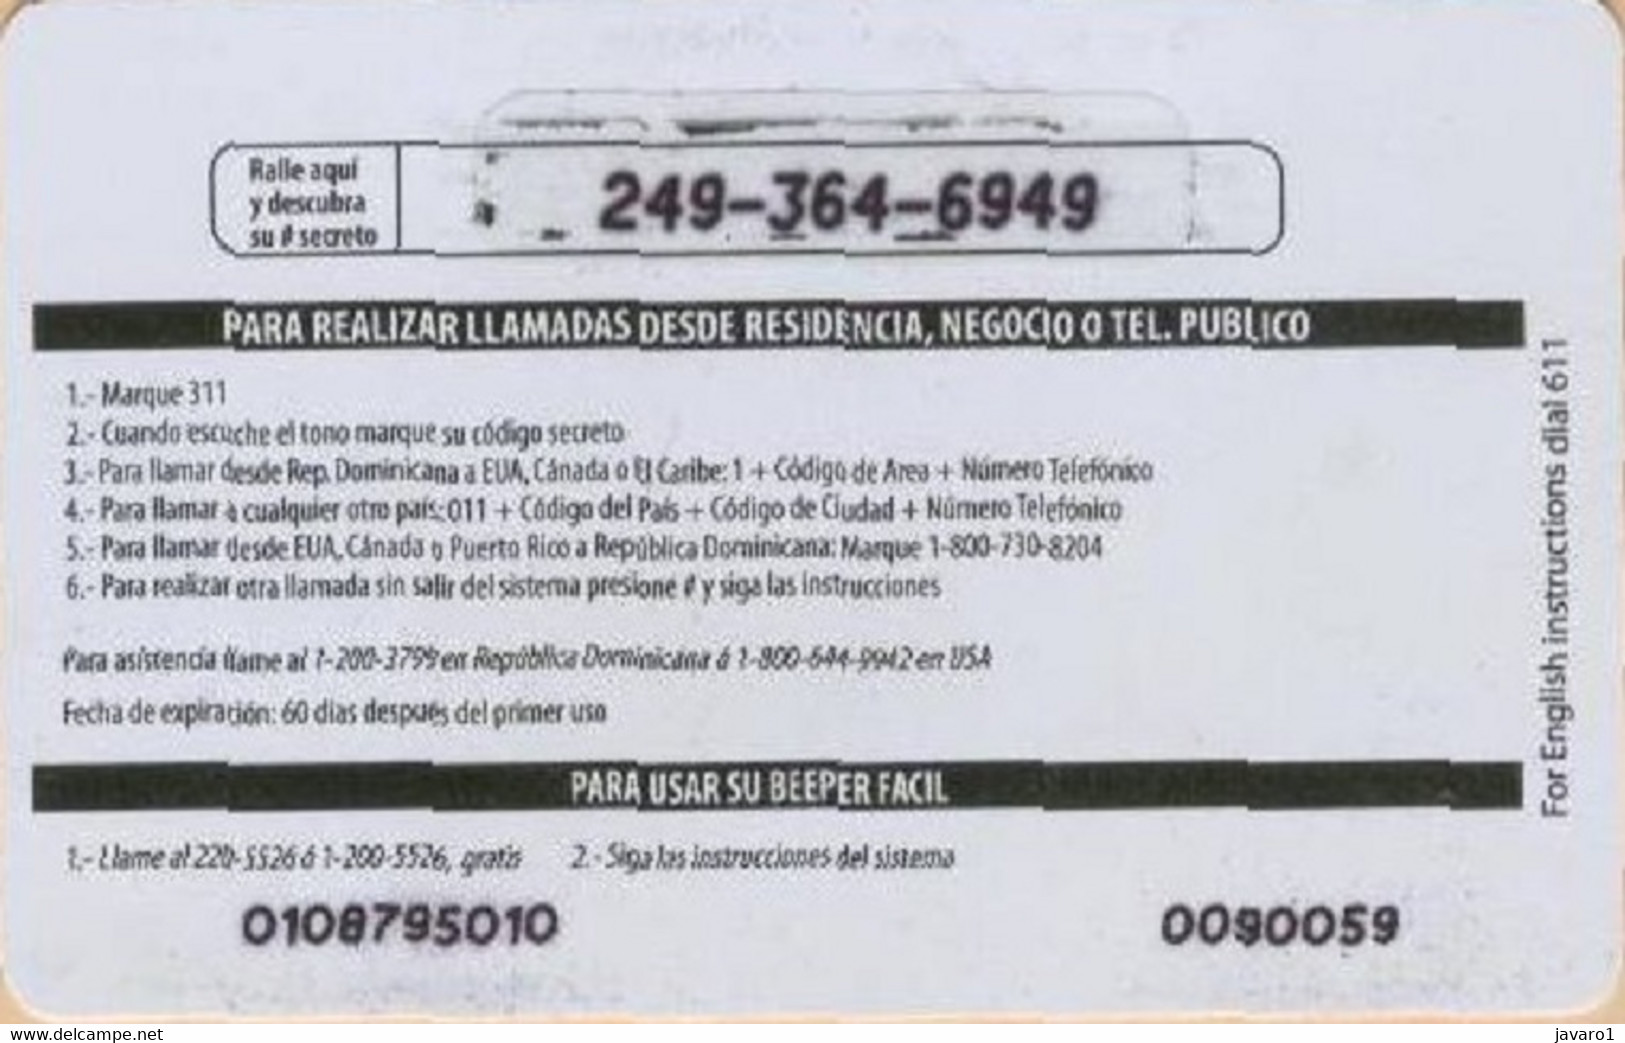 CODETEL : DMC108A RD$50 Yellow Telephone Receiver USED - Dominik. Republik